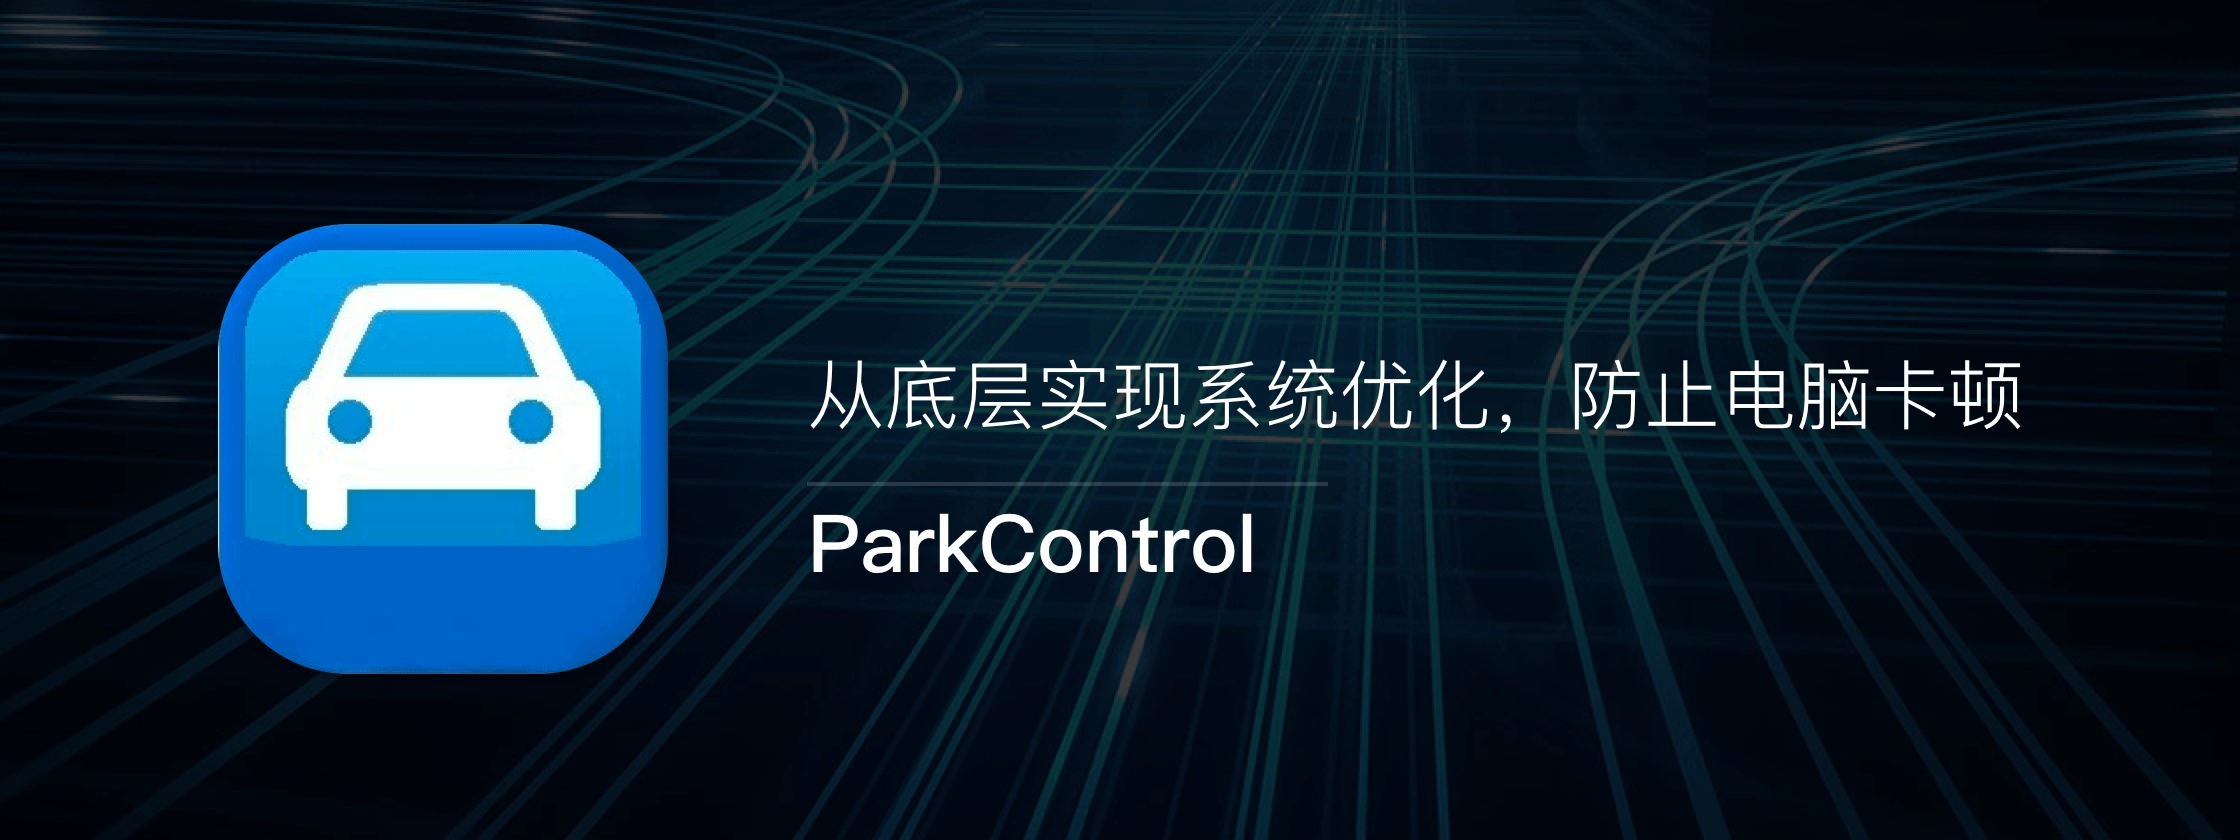 CPU频率调节软件 ParkControl Pro for Win v2.2.1.4 从底层实现系统优化 防止系统卡顿